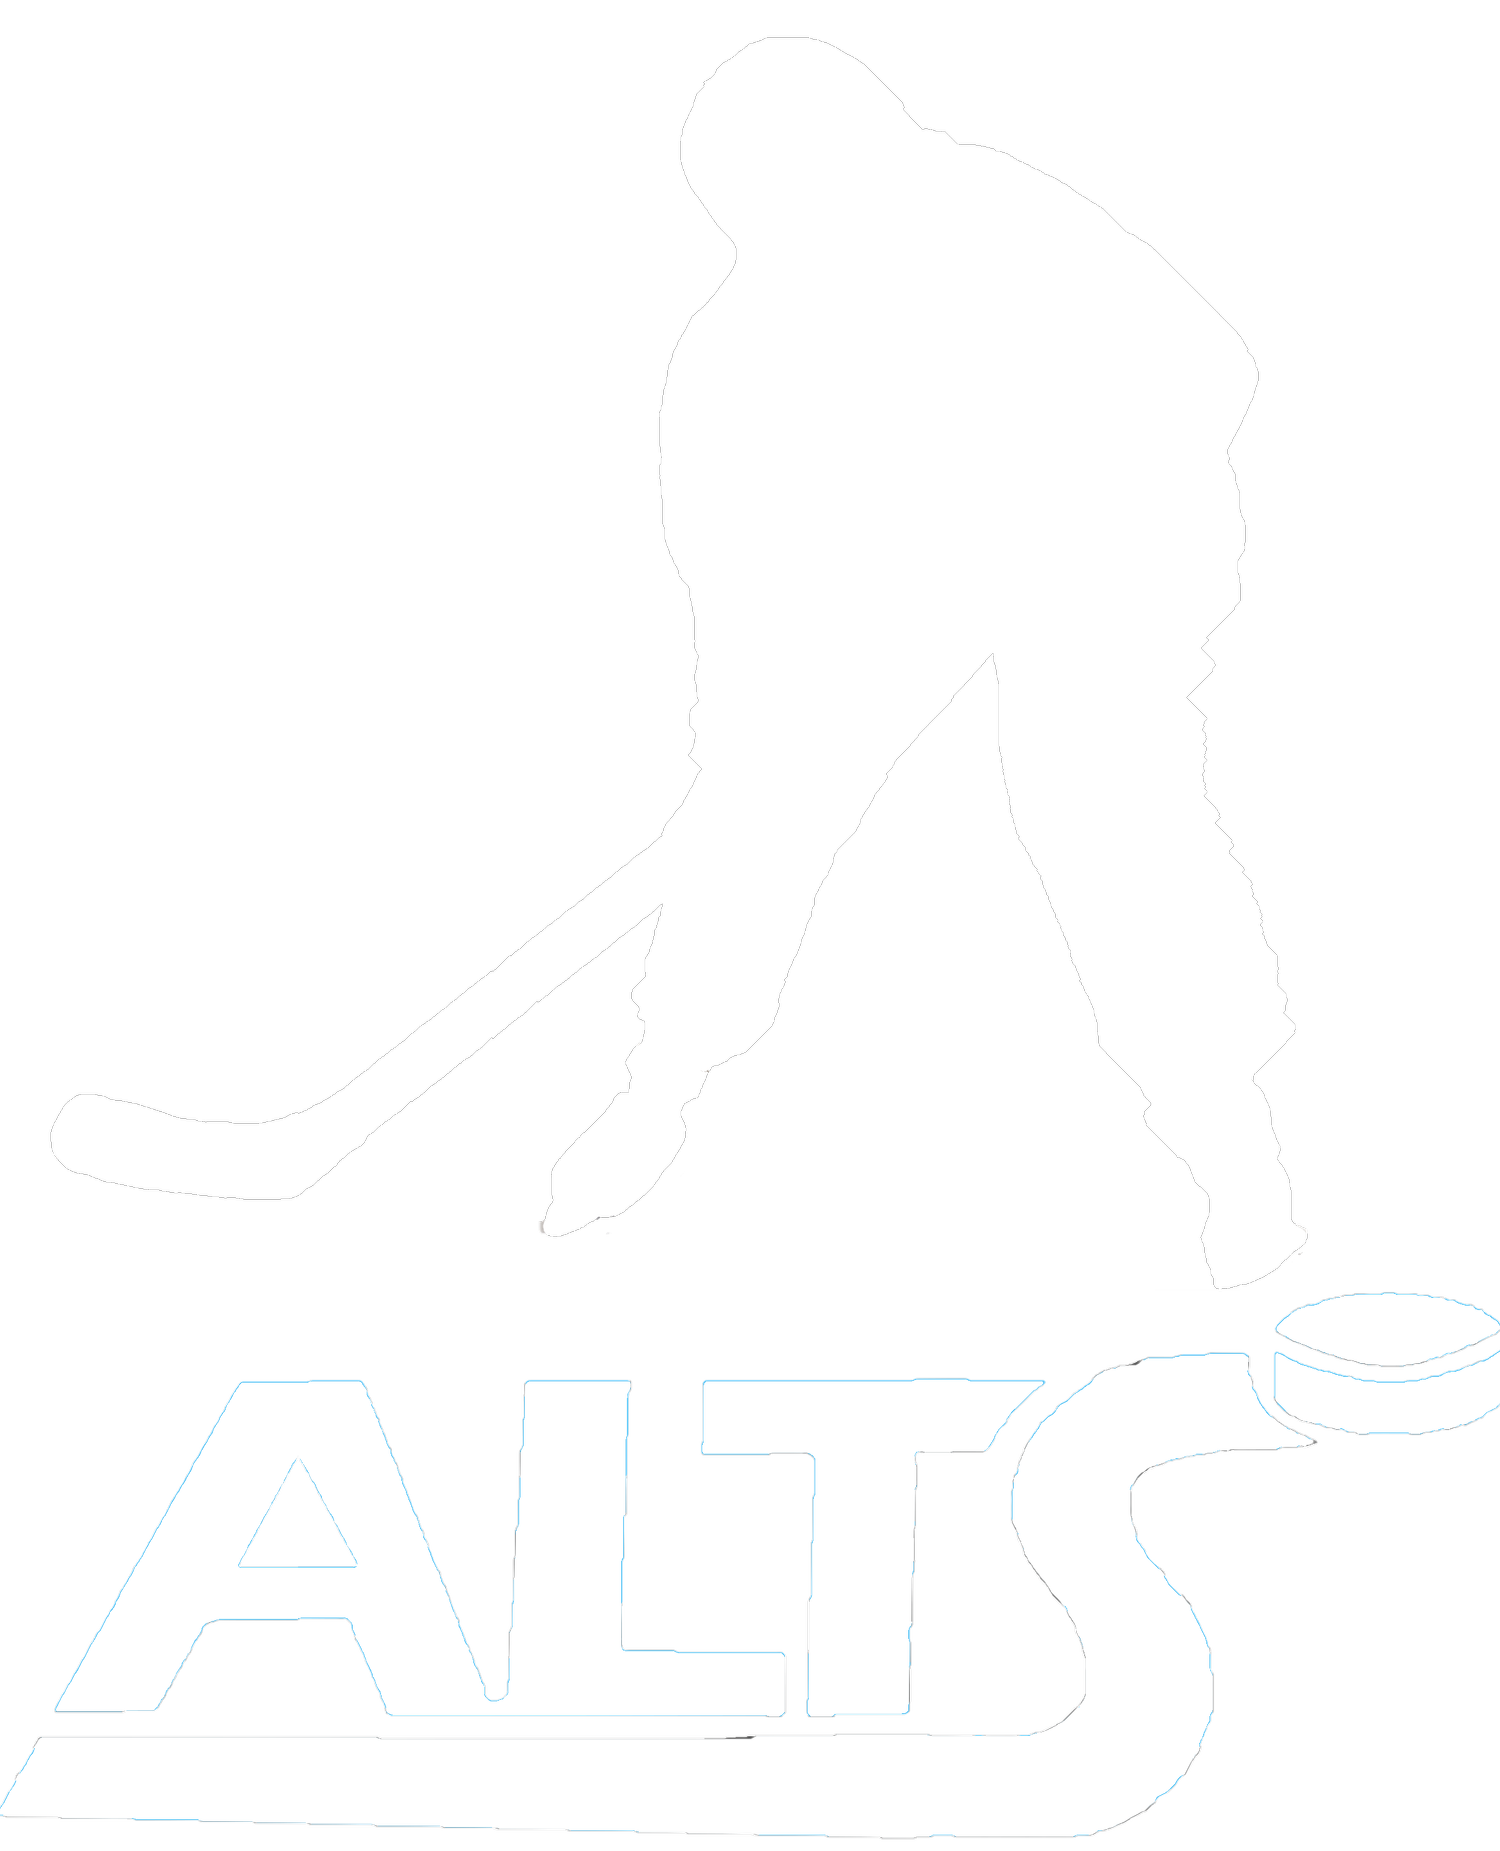 ALTS: Oxford University Alternative Ice Hockey Club